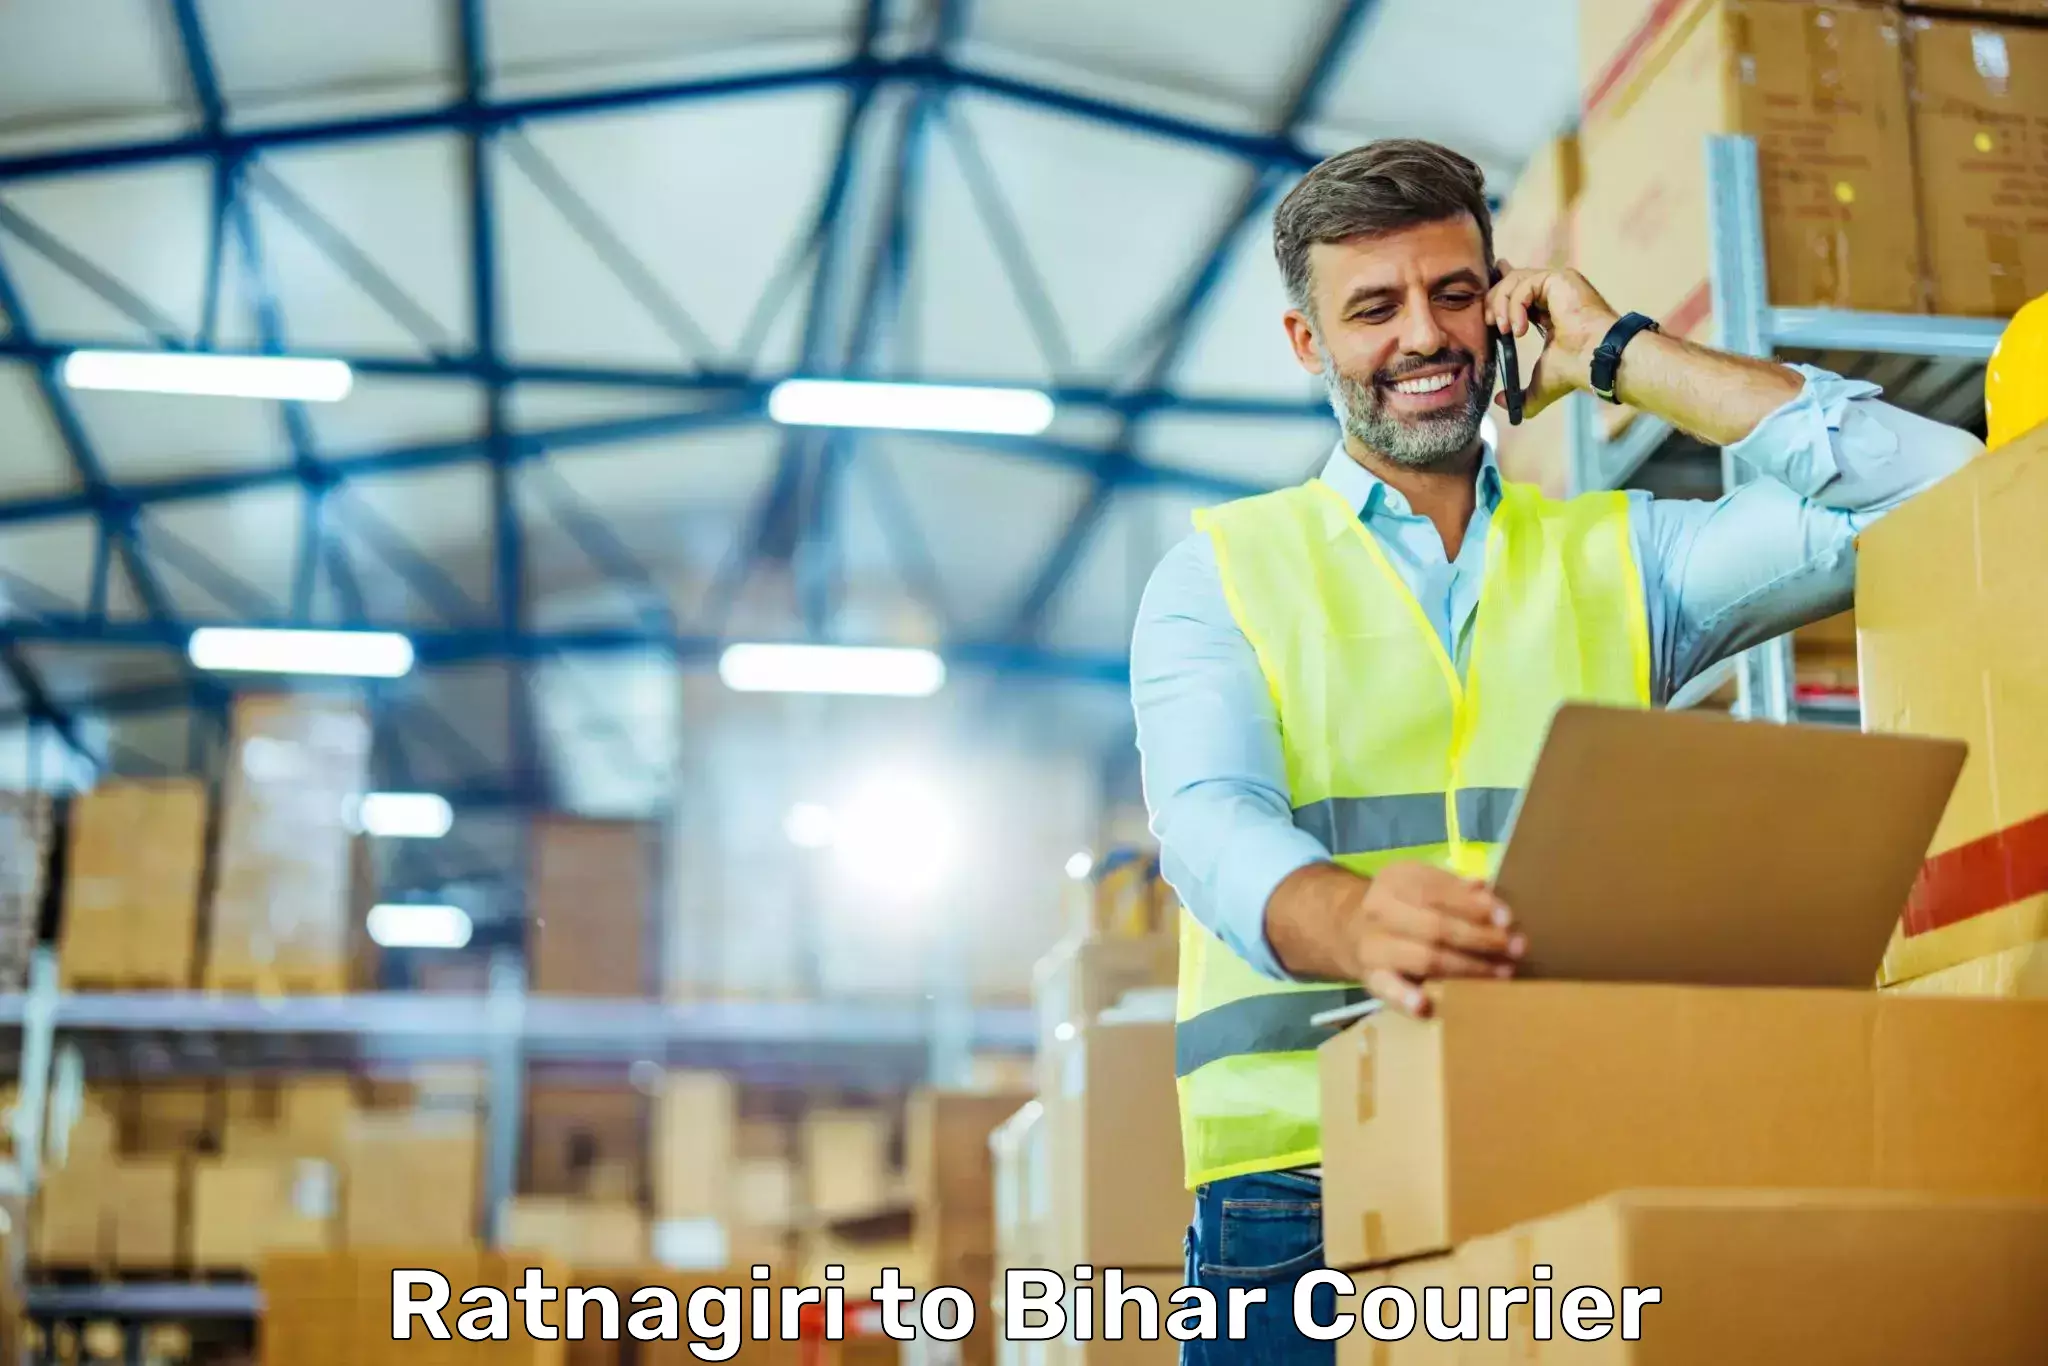 Courier service efficiency Ratnagiri to Sheonar